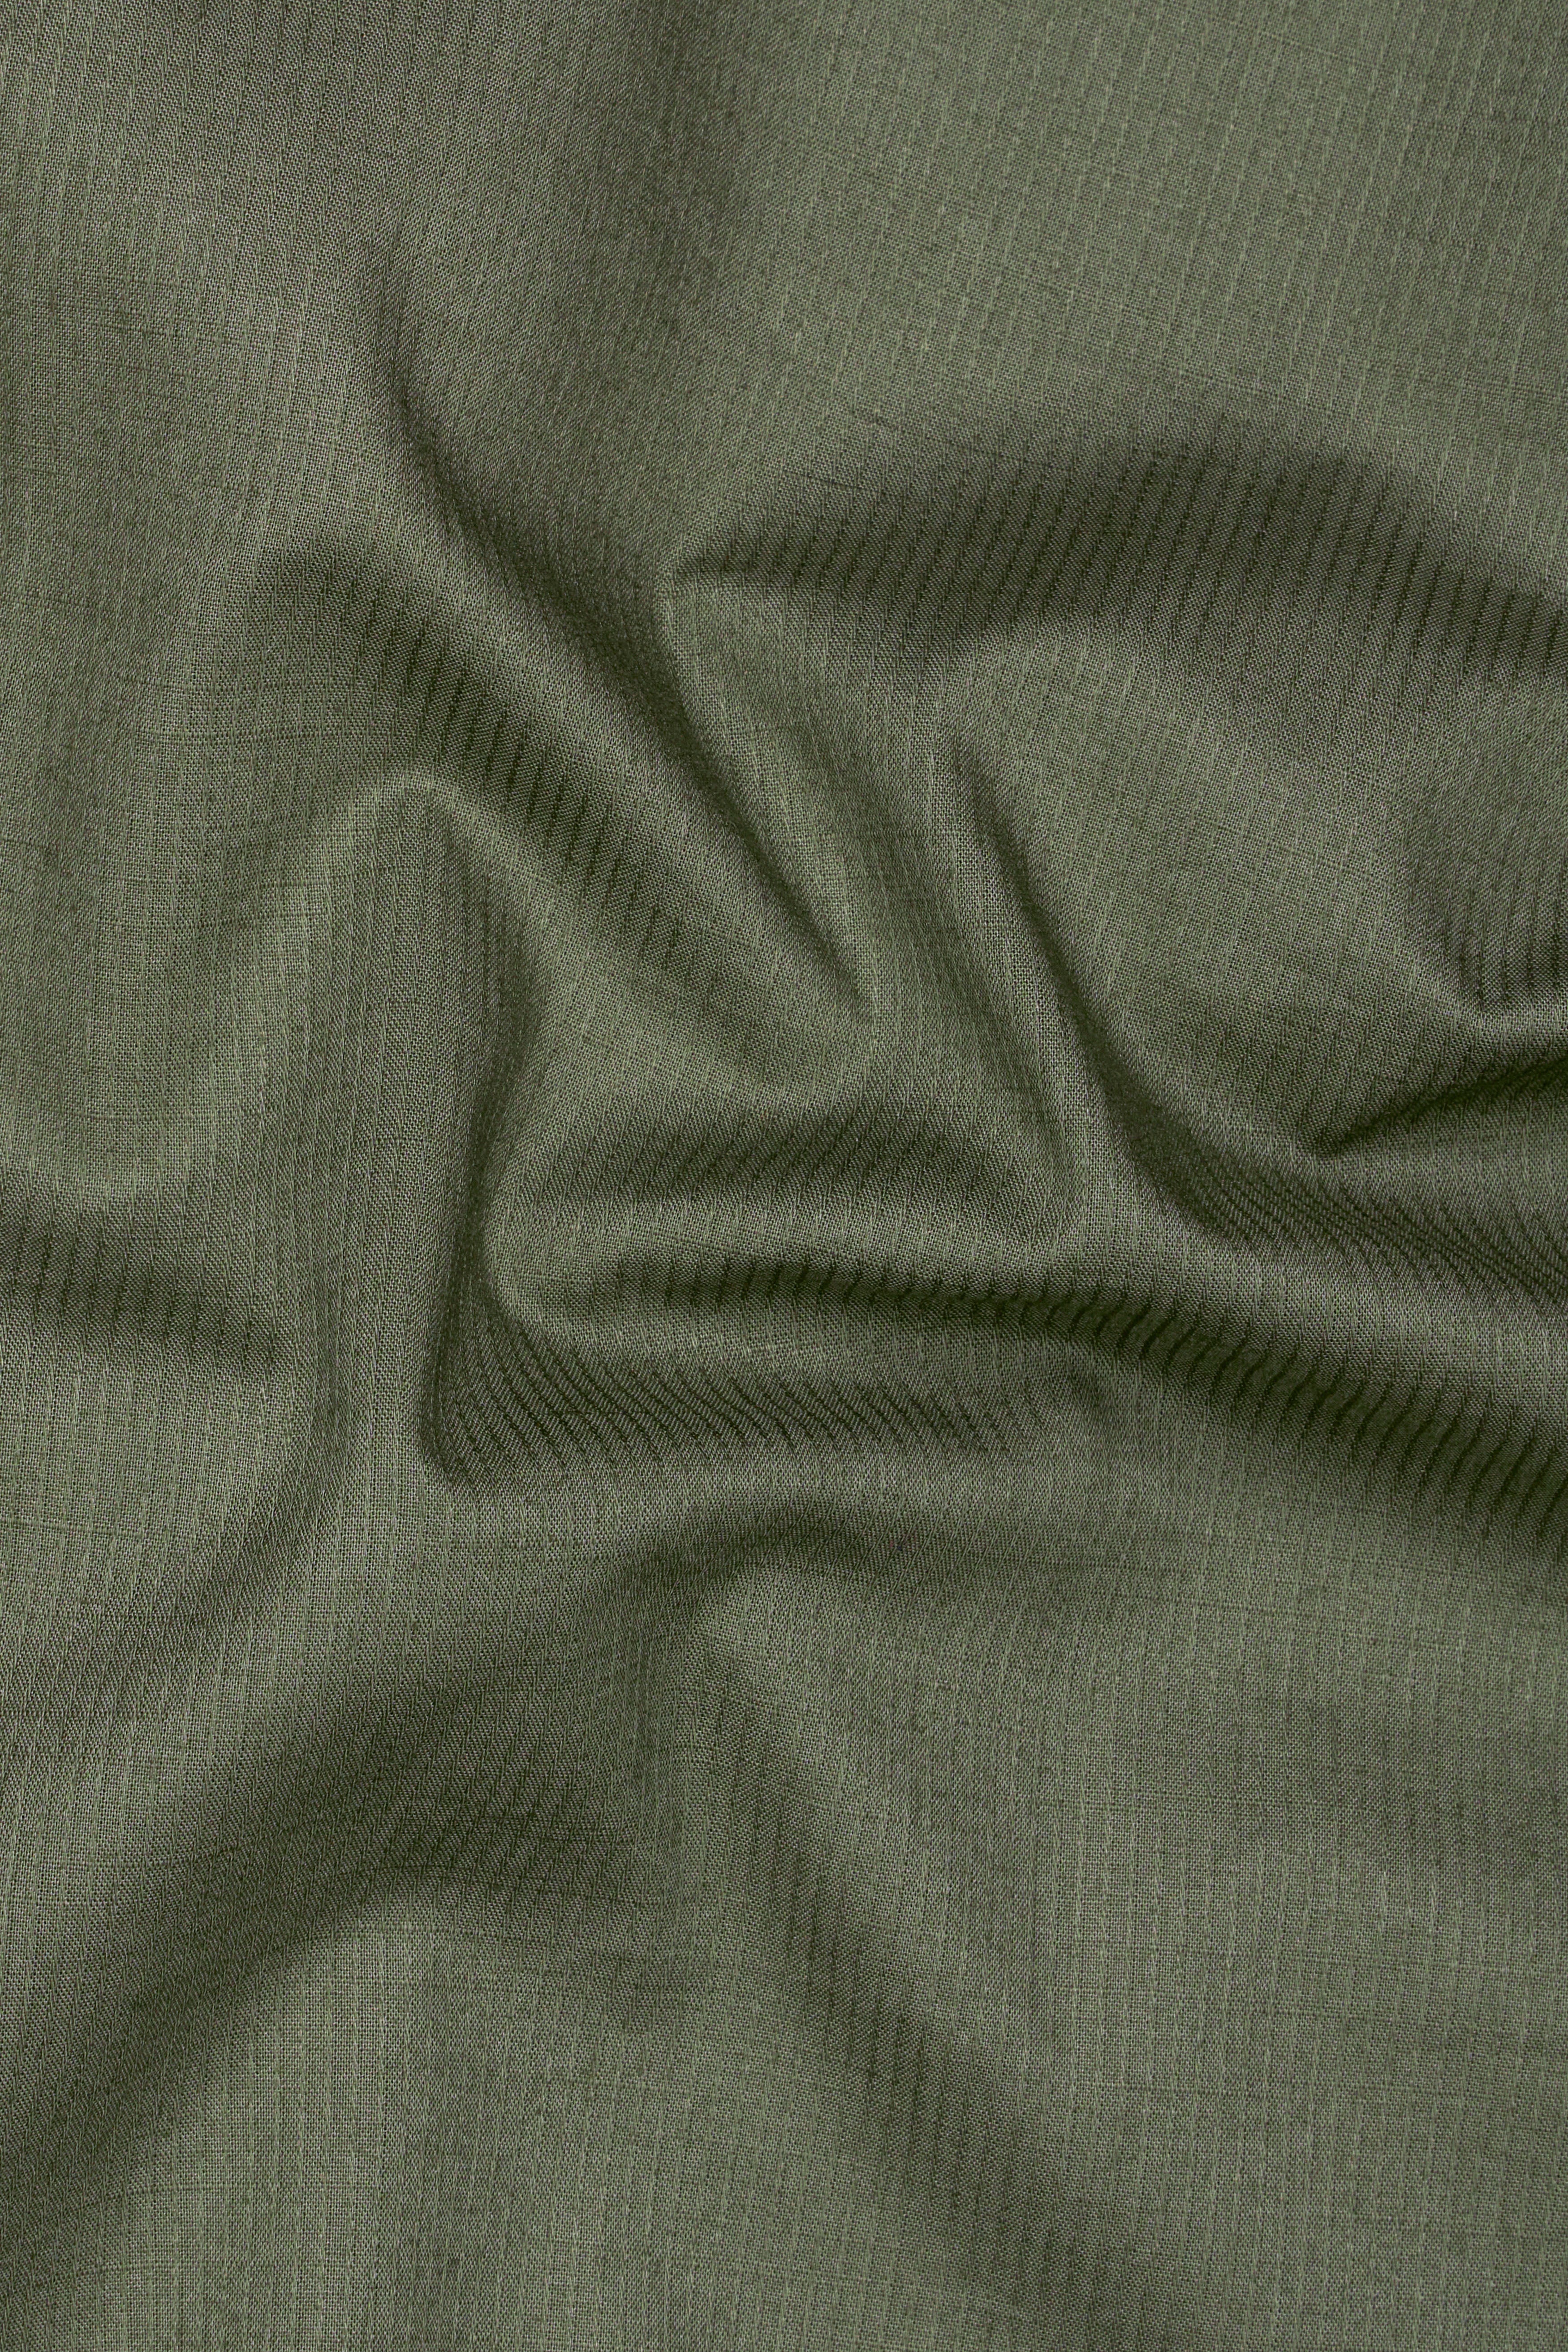 Liver Green Dobby Textured Premium Giza Cotton Shirt 10142-BD-BLK-38, 10142-BD-BLK-H-38, 10142-BD-BLK-39, 10142-BD-BLK-H-39, 10142-BD-BLK-40, 10142-BD-BLK-H-40, 10142-BD-BLK-42, 10142-BD-BLK-H-42, 10142-BD-BLK-44, 10142-BD-BLK-H-44, 10142-BD-BLK-46, 10142-BD-BLK-H-46, 10142-BD-BLK-48, 10142-BD-BLK-H-48, 10142-BD-BLK-50, 10142-BD-BLK-H-50, 10142-BD-BLK-52, 10142-BD-BLK-H-52